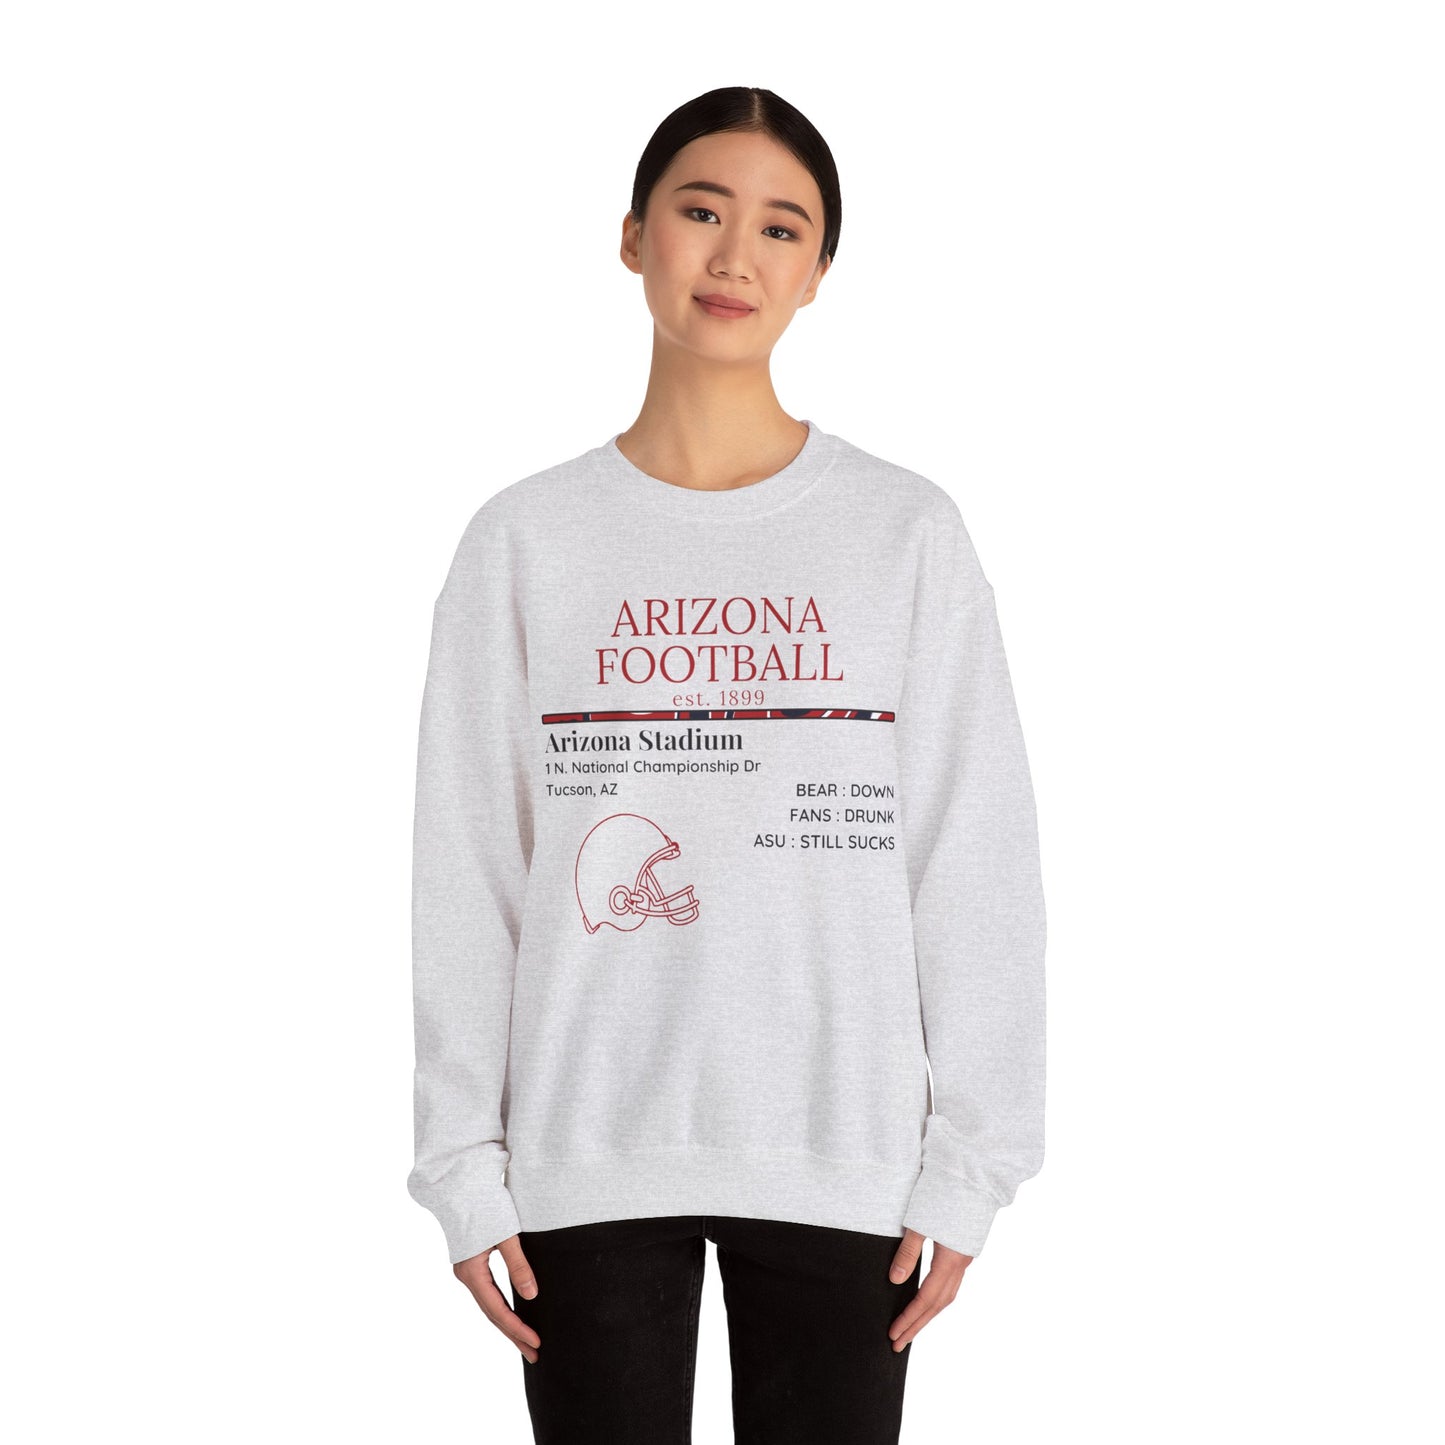 Arizona Football Sweatshirt